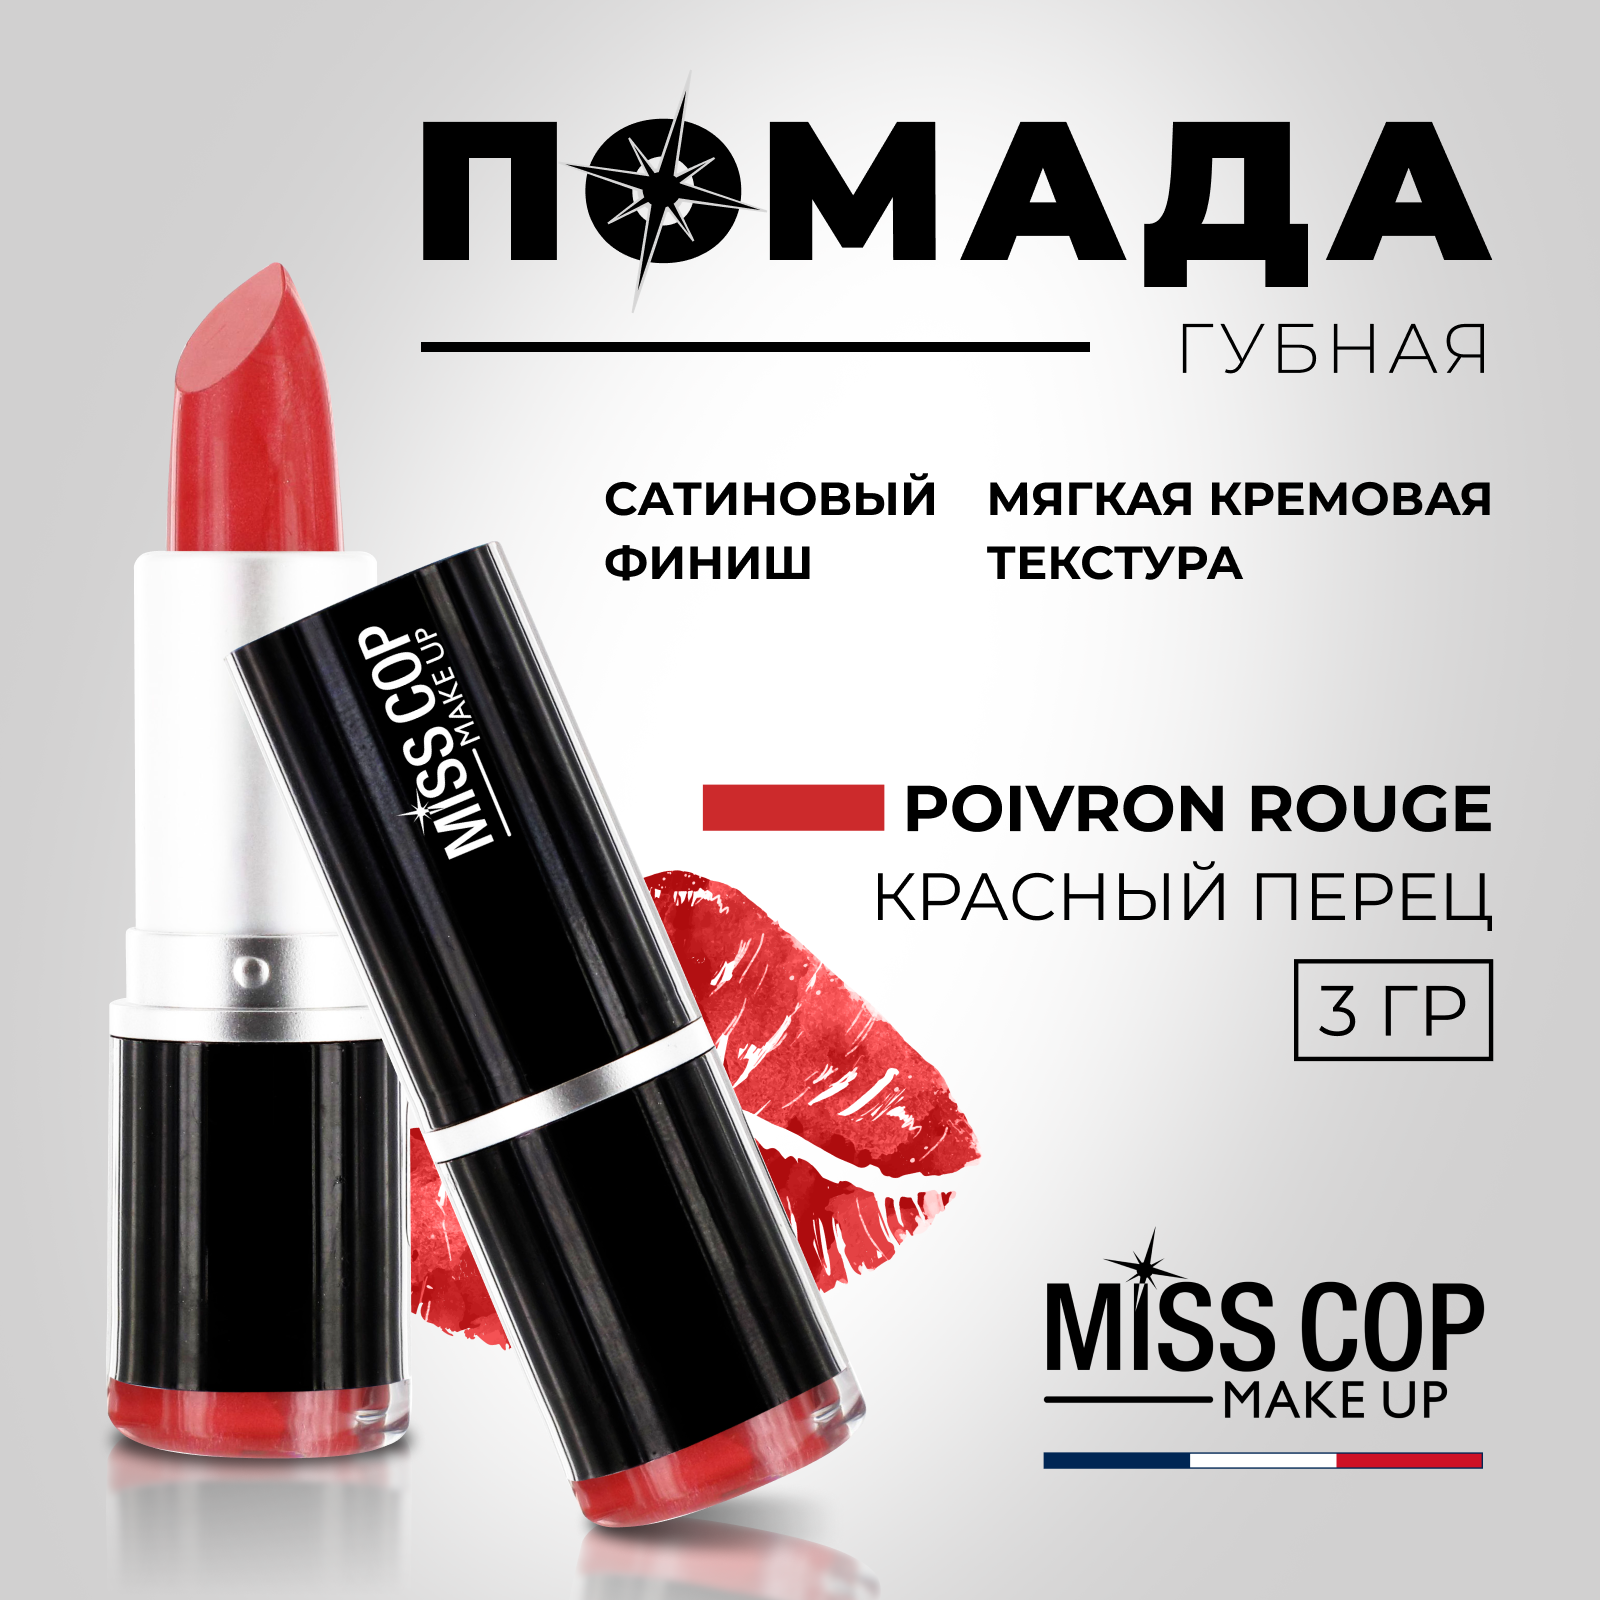 Помада губная матовая красная MISS COP стойкая, цвет 20 Poivron rouge (перец), 3 г